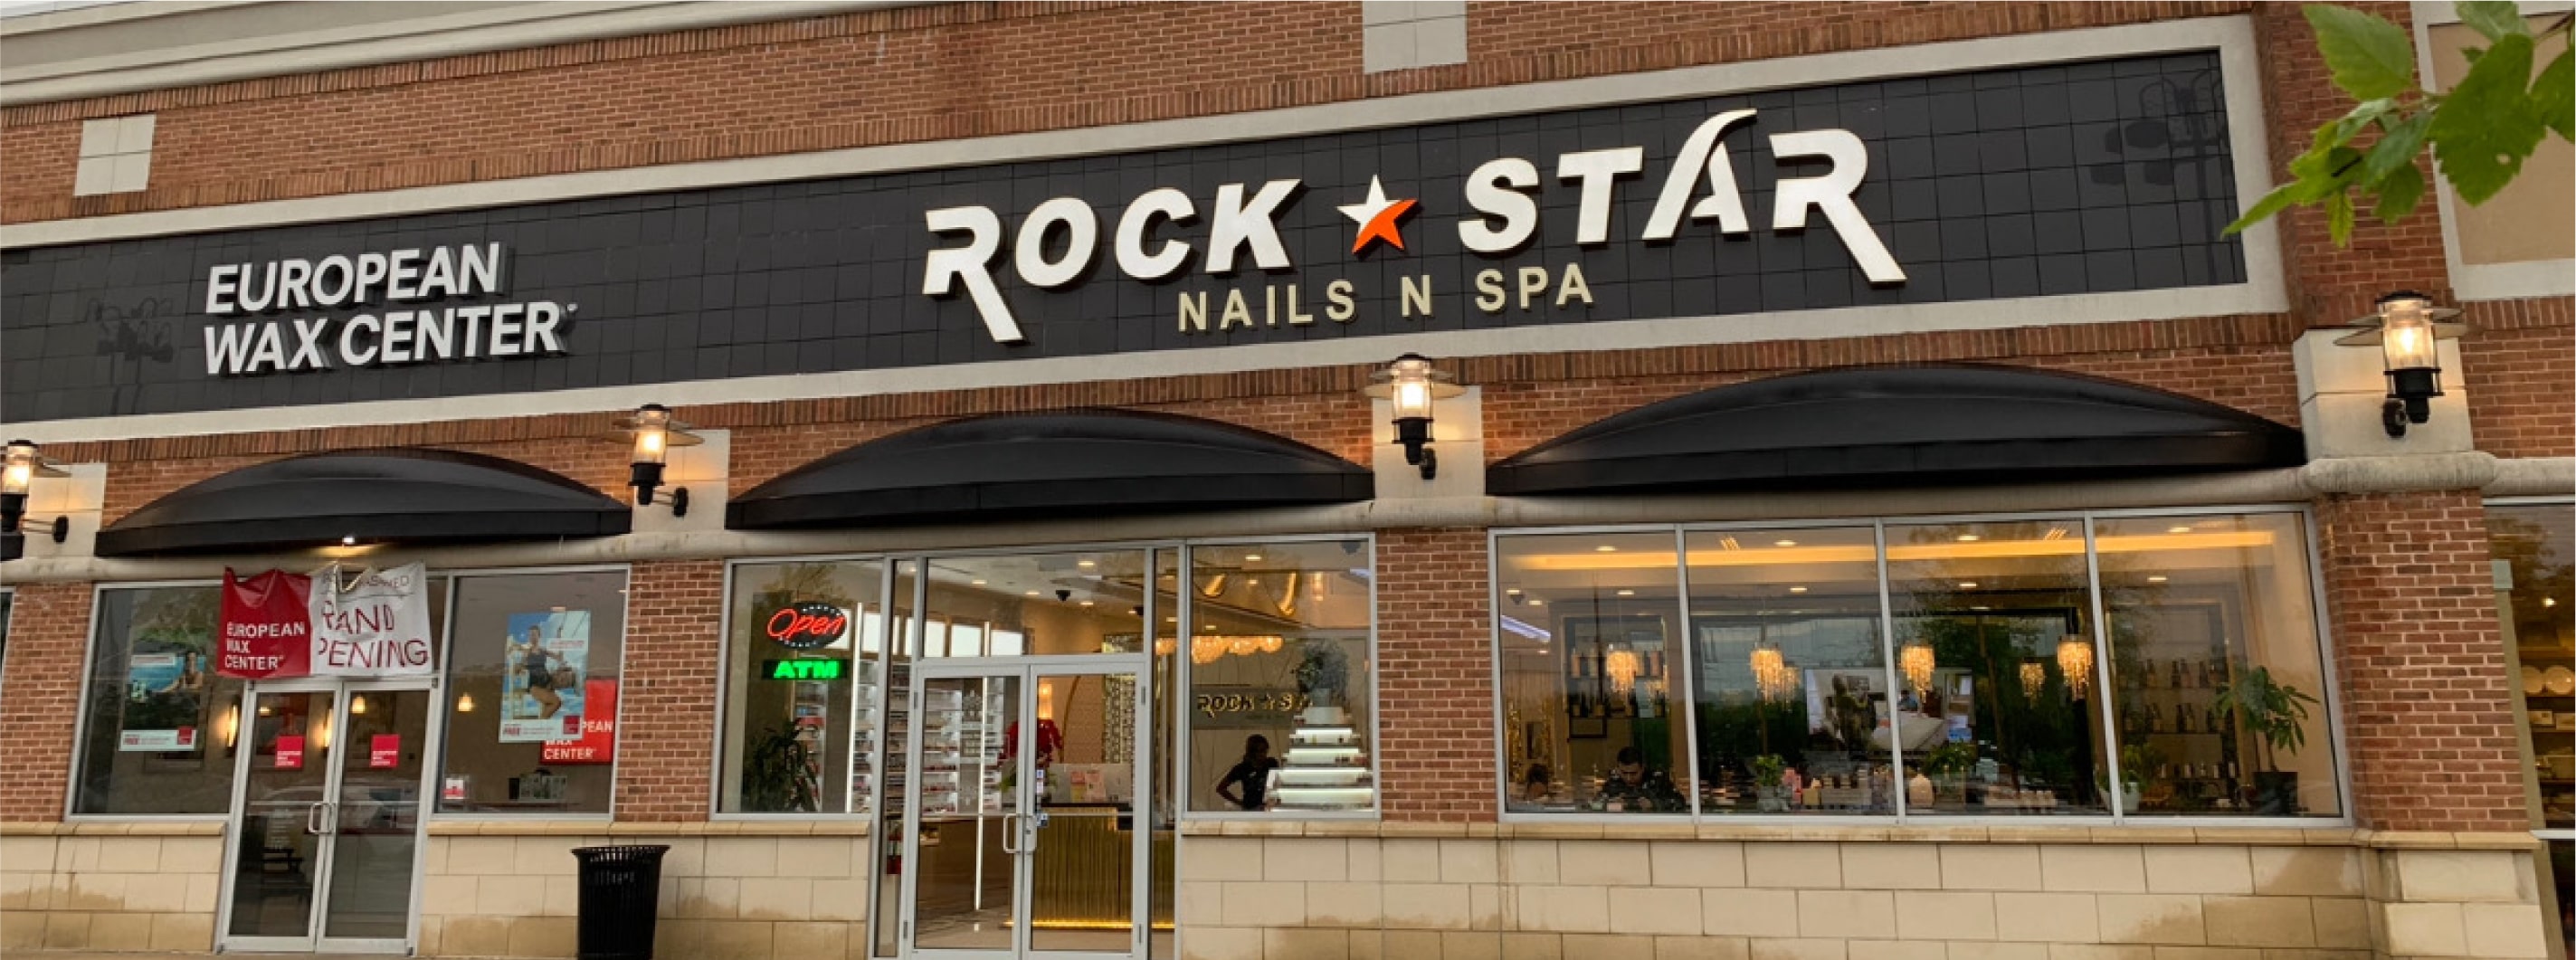 RockStar Nails N Spa appointment